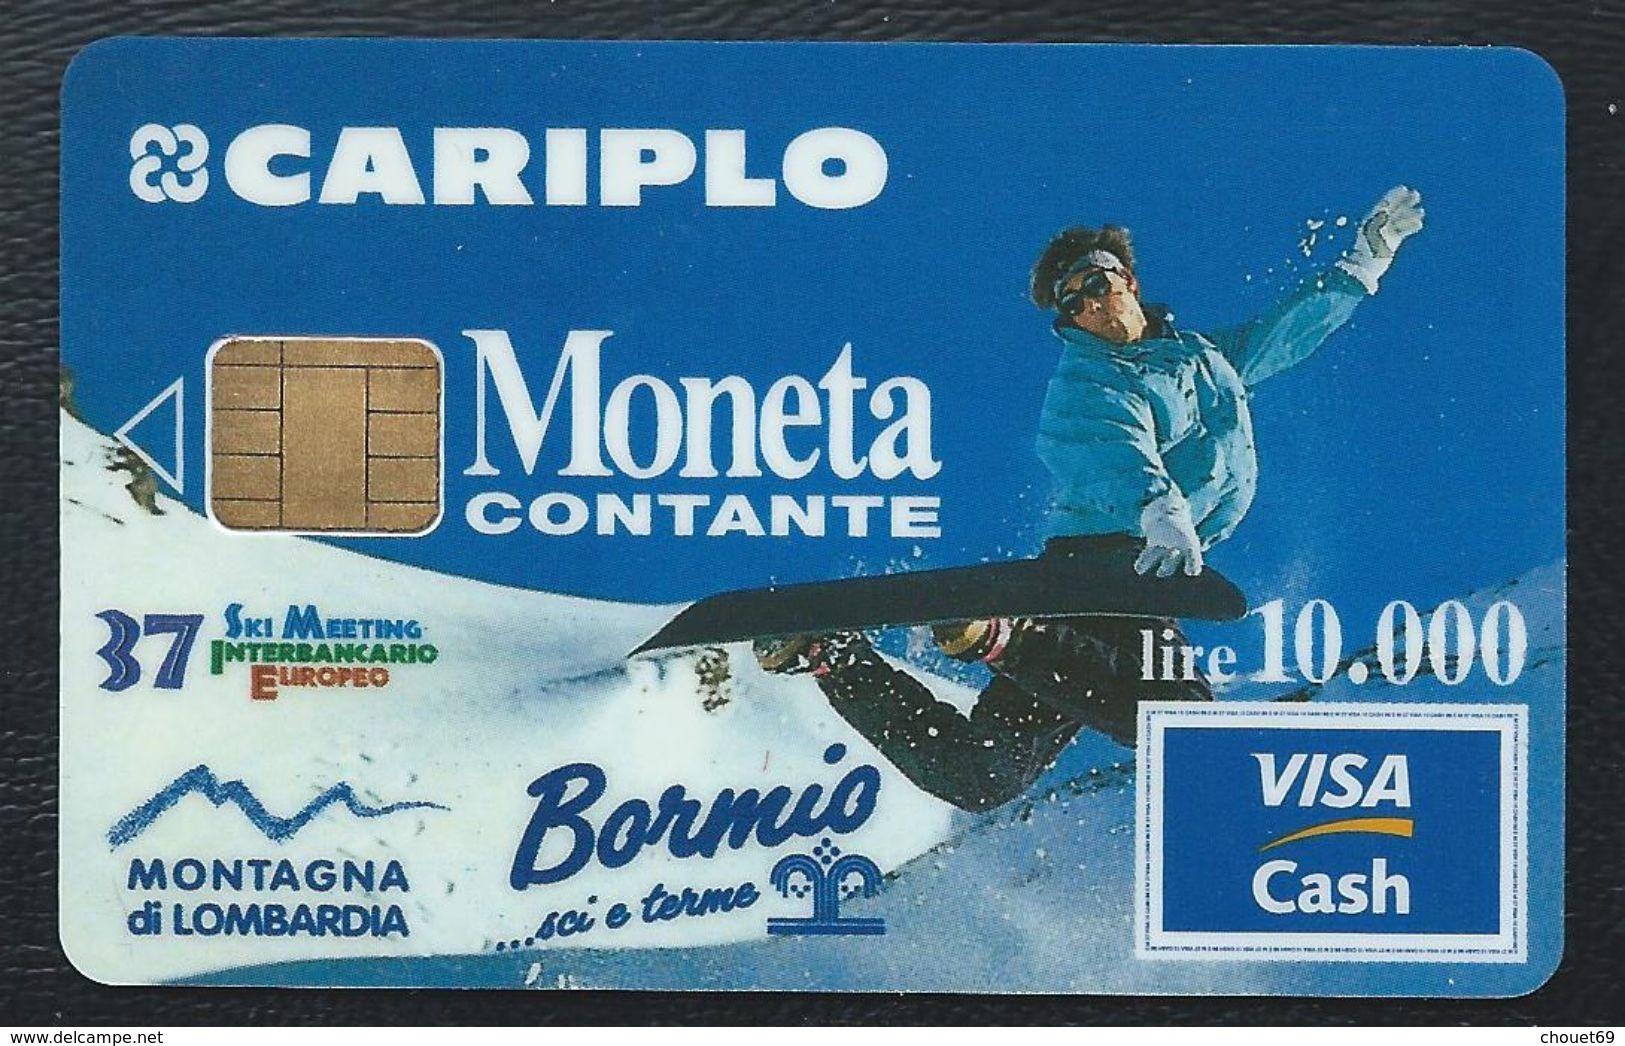 VISA CASH MONETA CARIPLO Bormis 37eme Ski Meeting Interbancario CB MONEO Visacash - Deportes